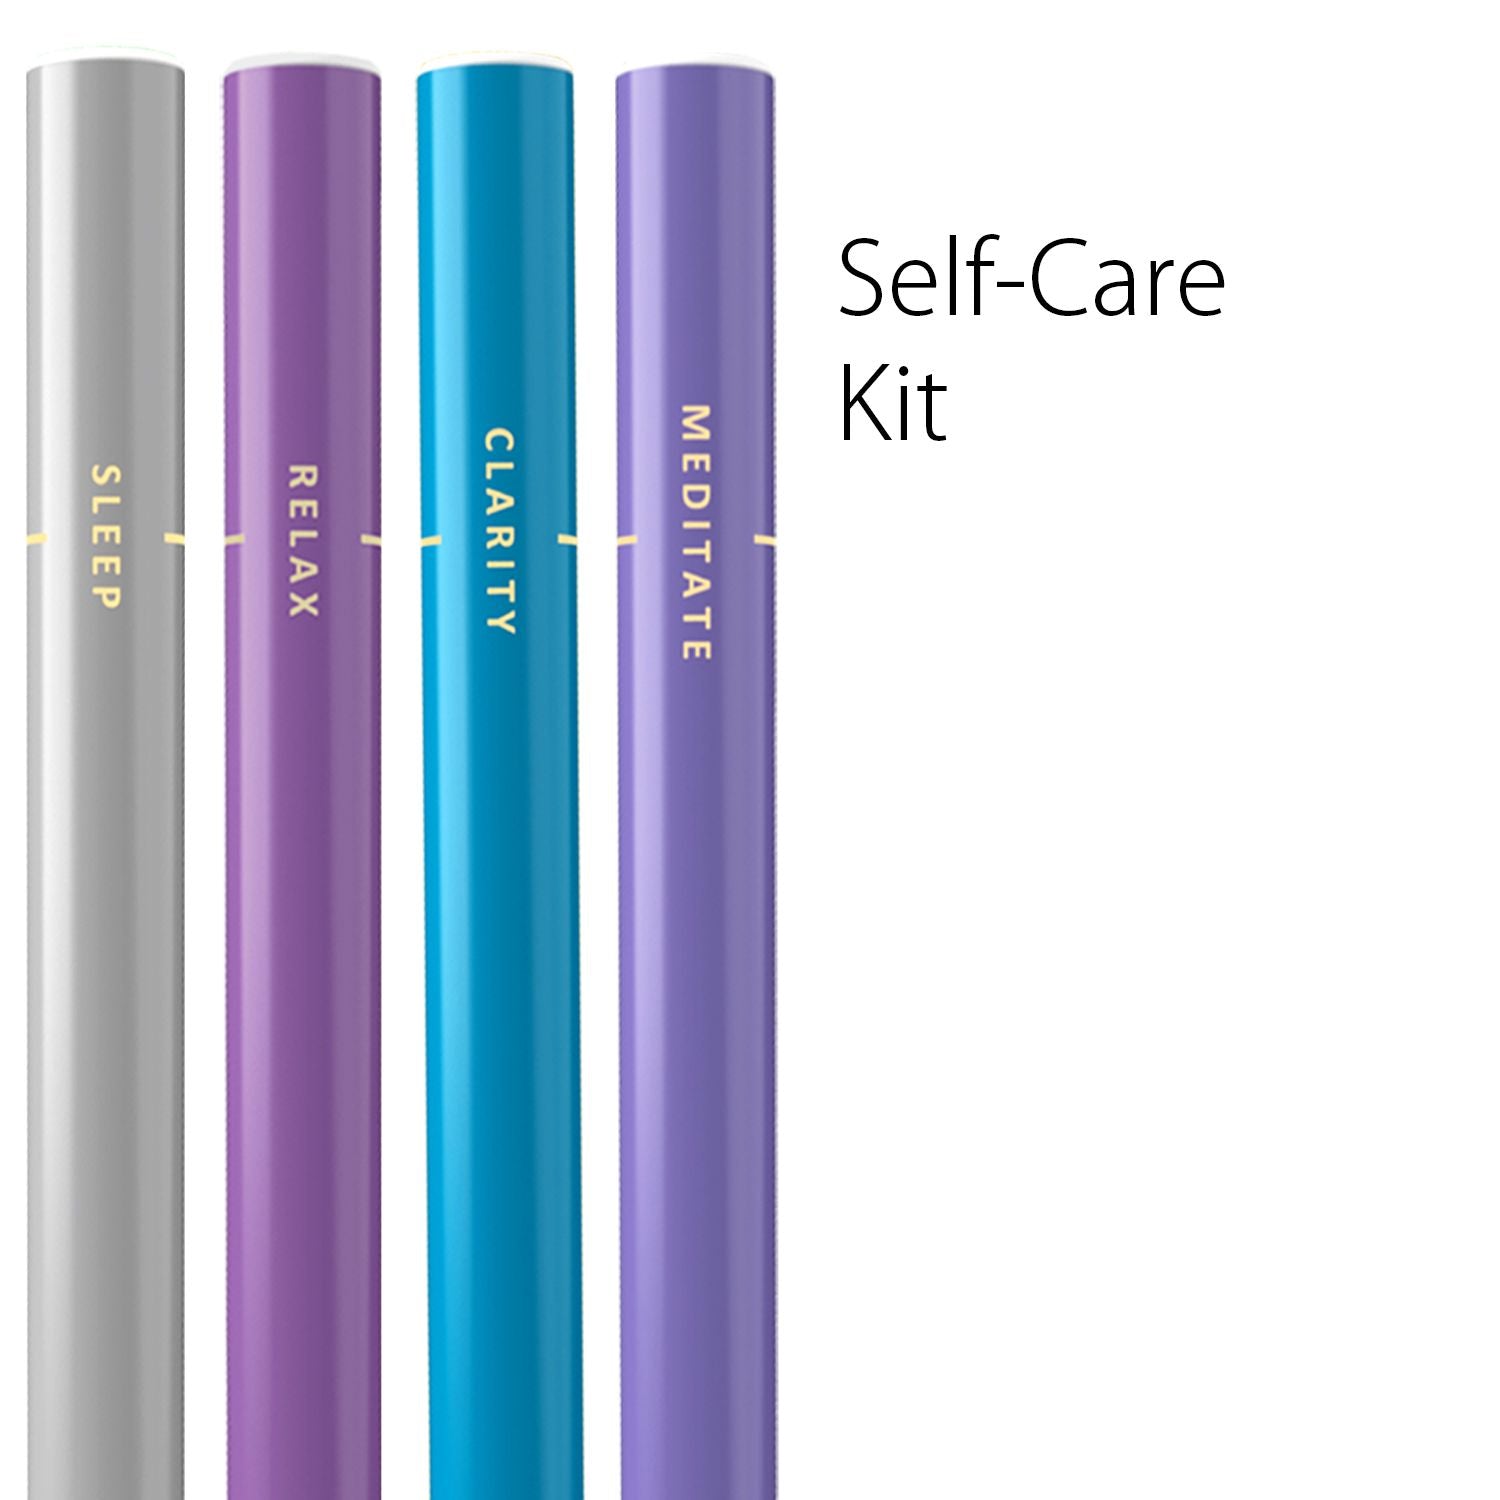 Self Care Kit — Nursing Your Way to Wellness